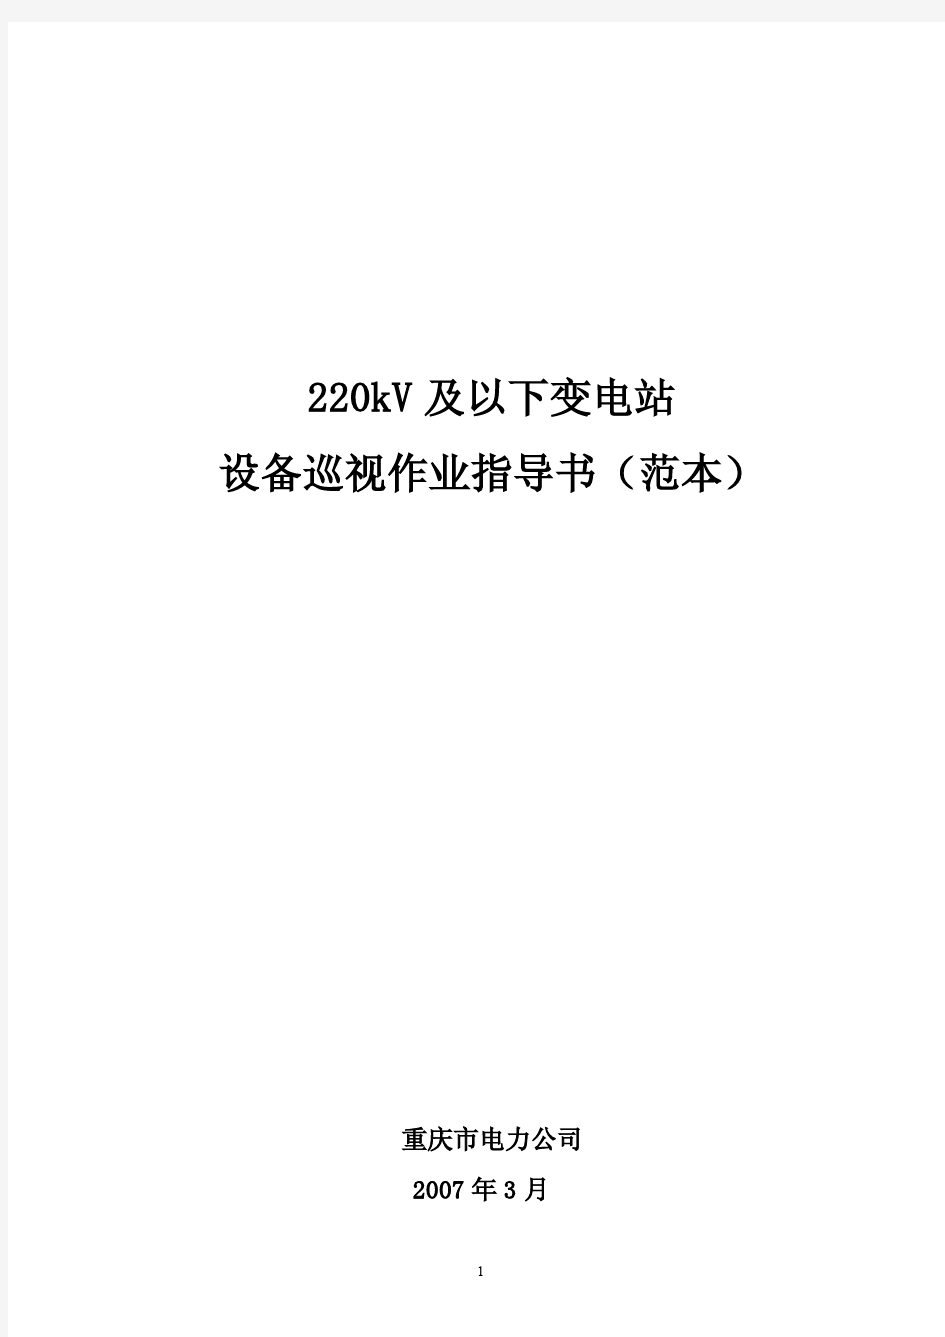 220kV及以下变电站设备巡视作业指导书(正式版)